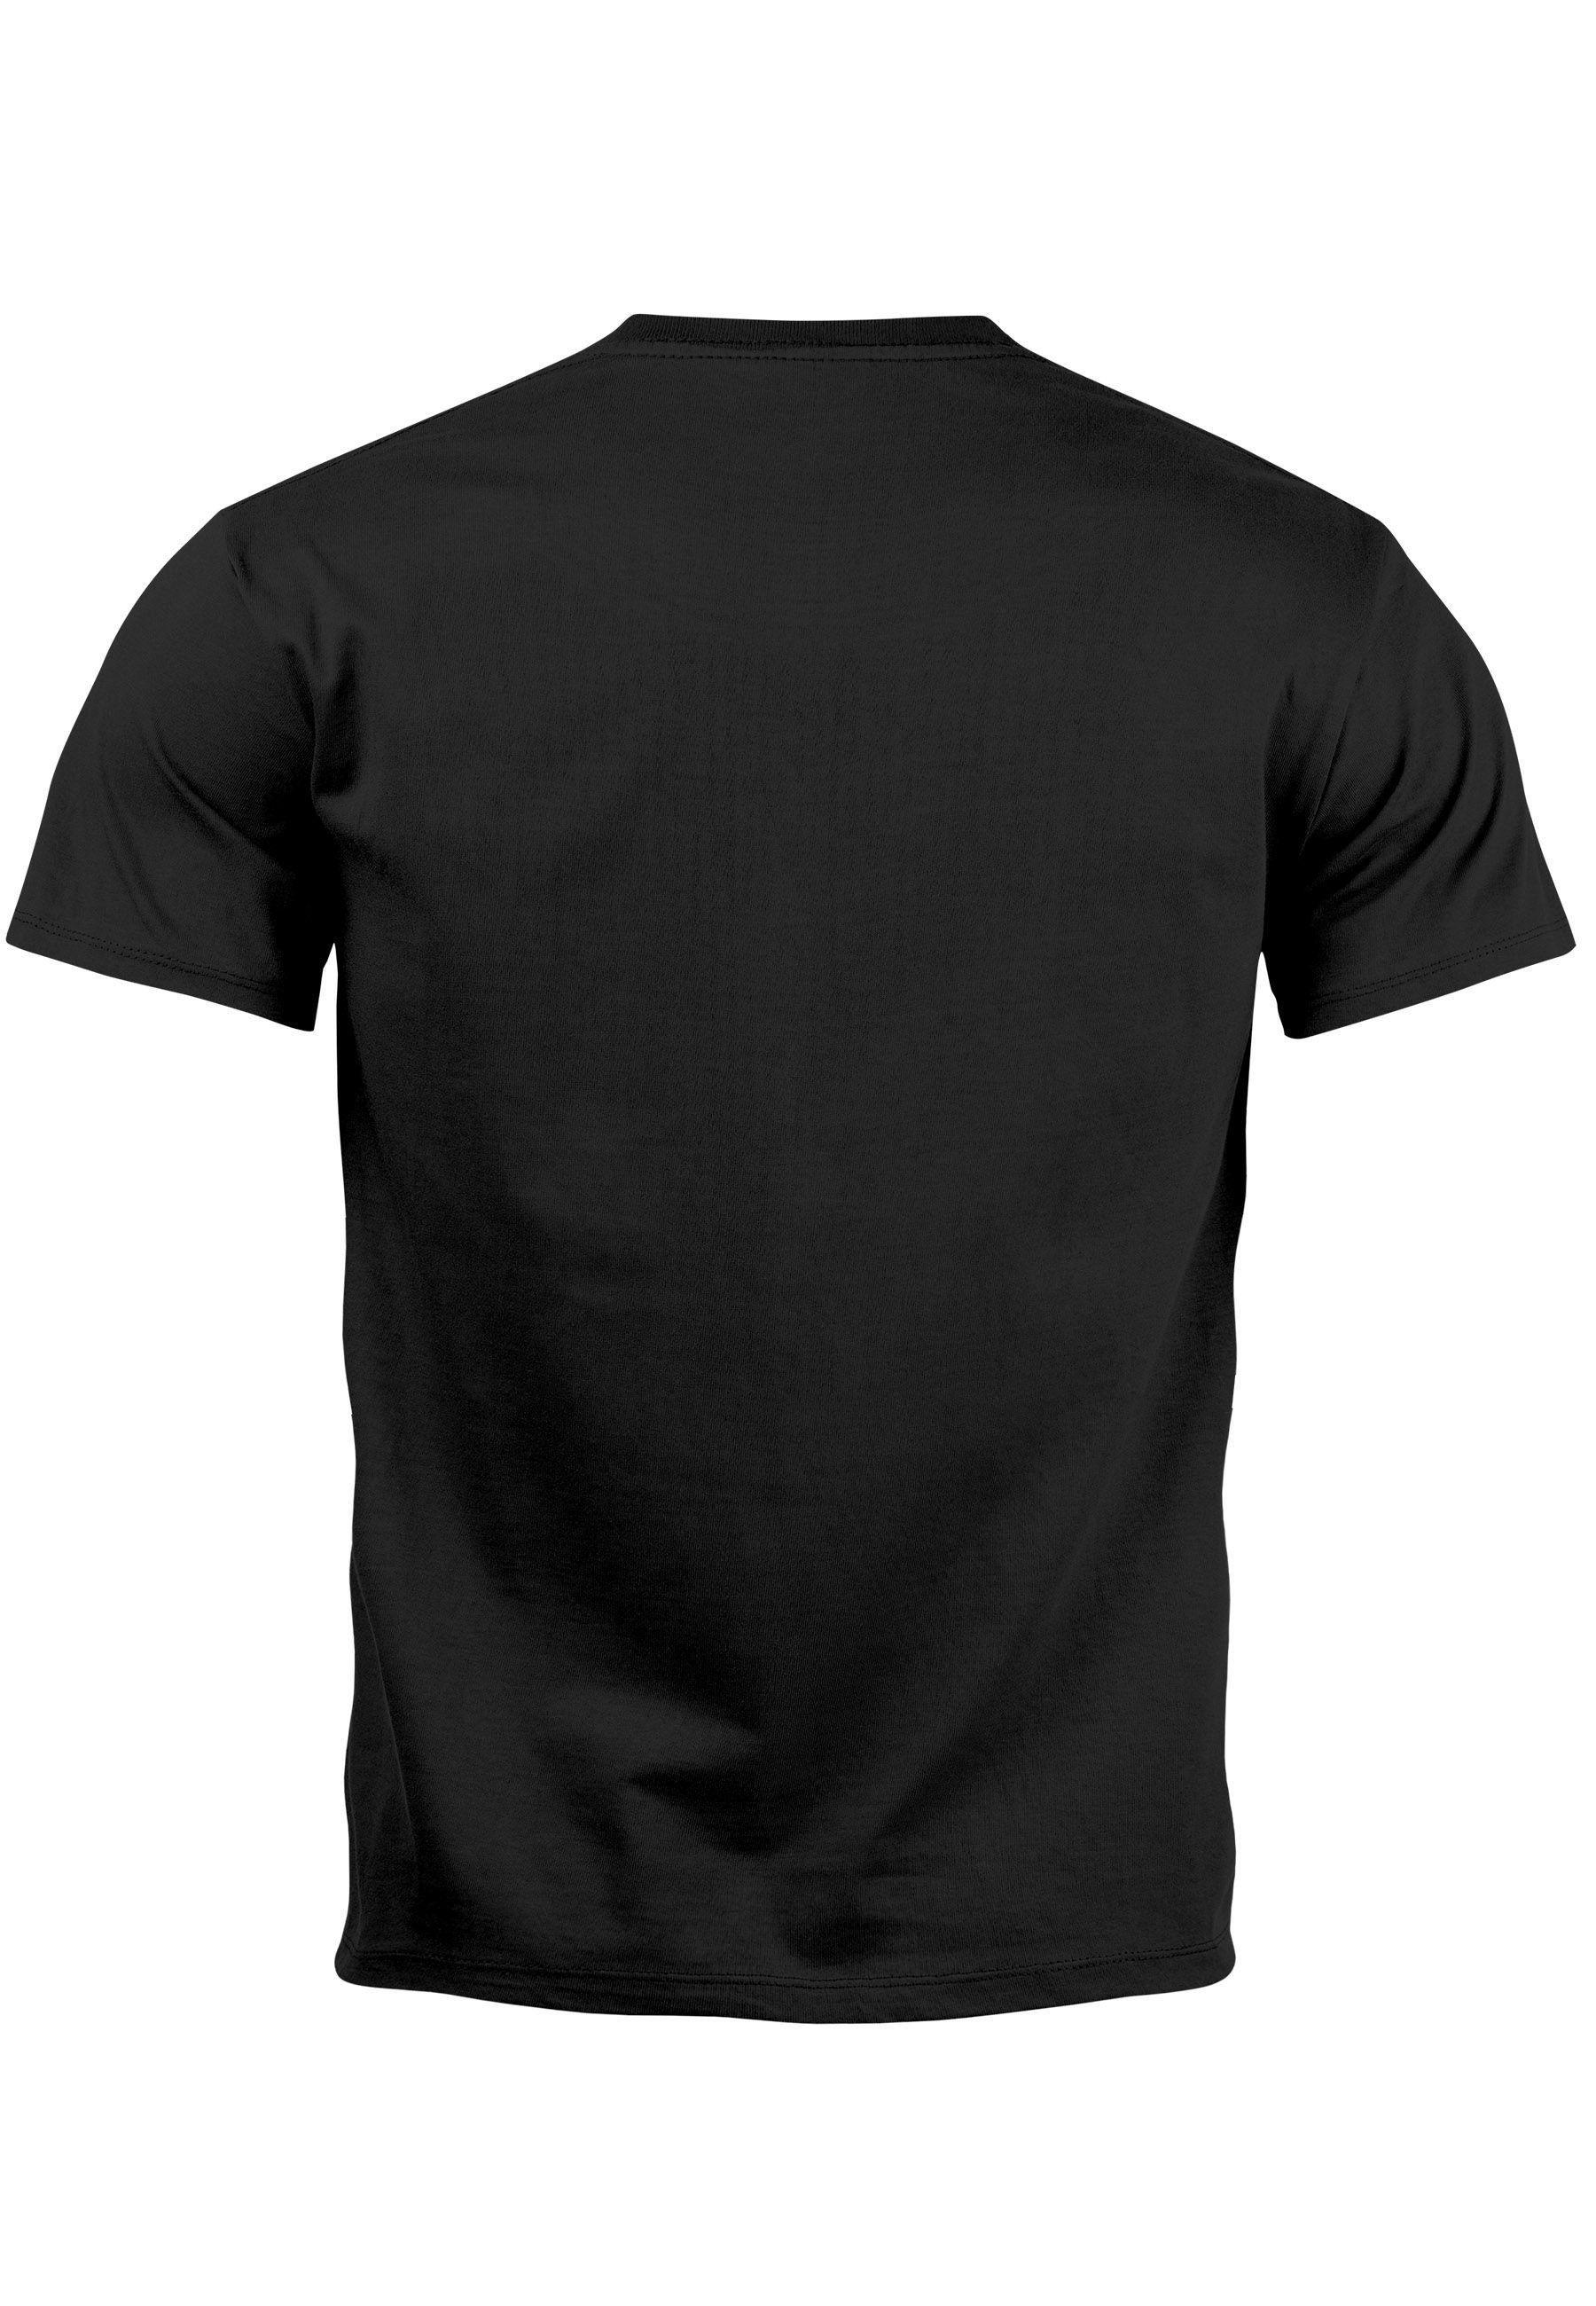 MichelangeloTechno T-Shirt Neverless Print Dance Music Fashion Herren schwarz Print-Shirt Str mit DJ Eletronic